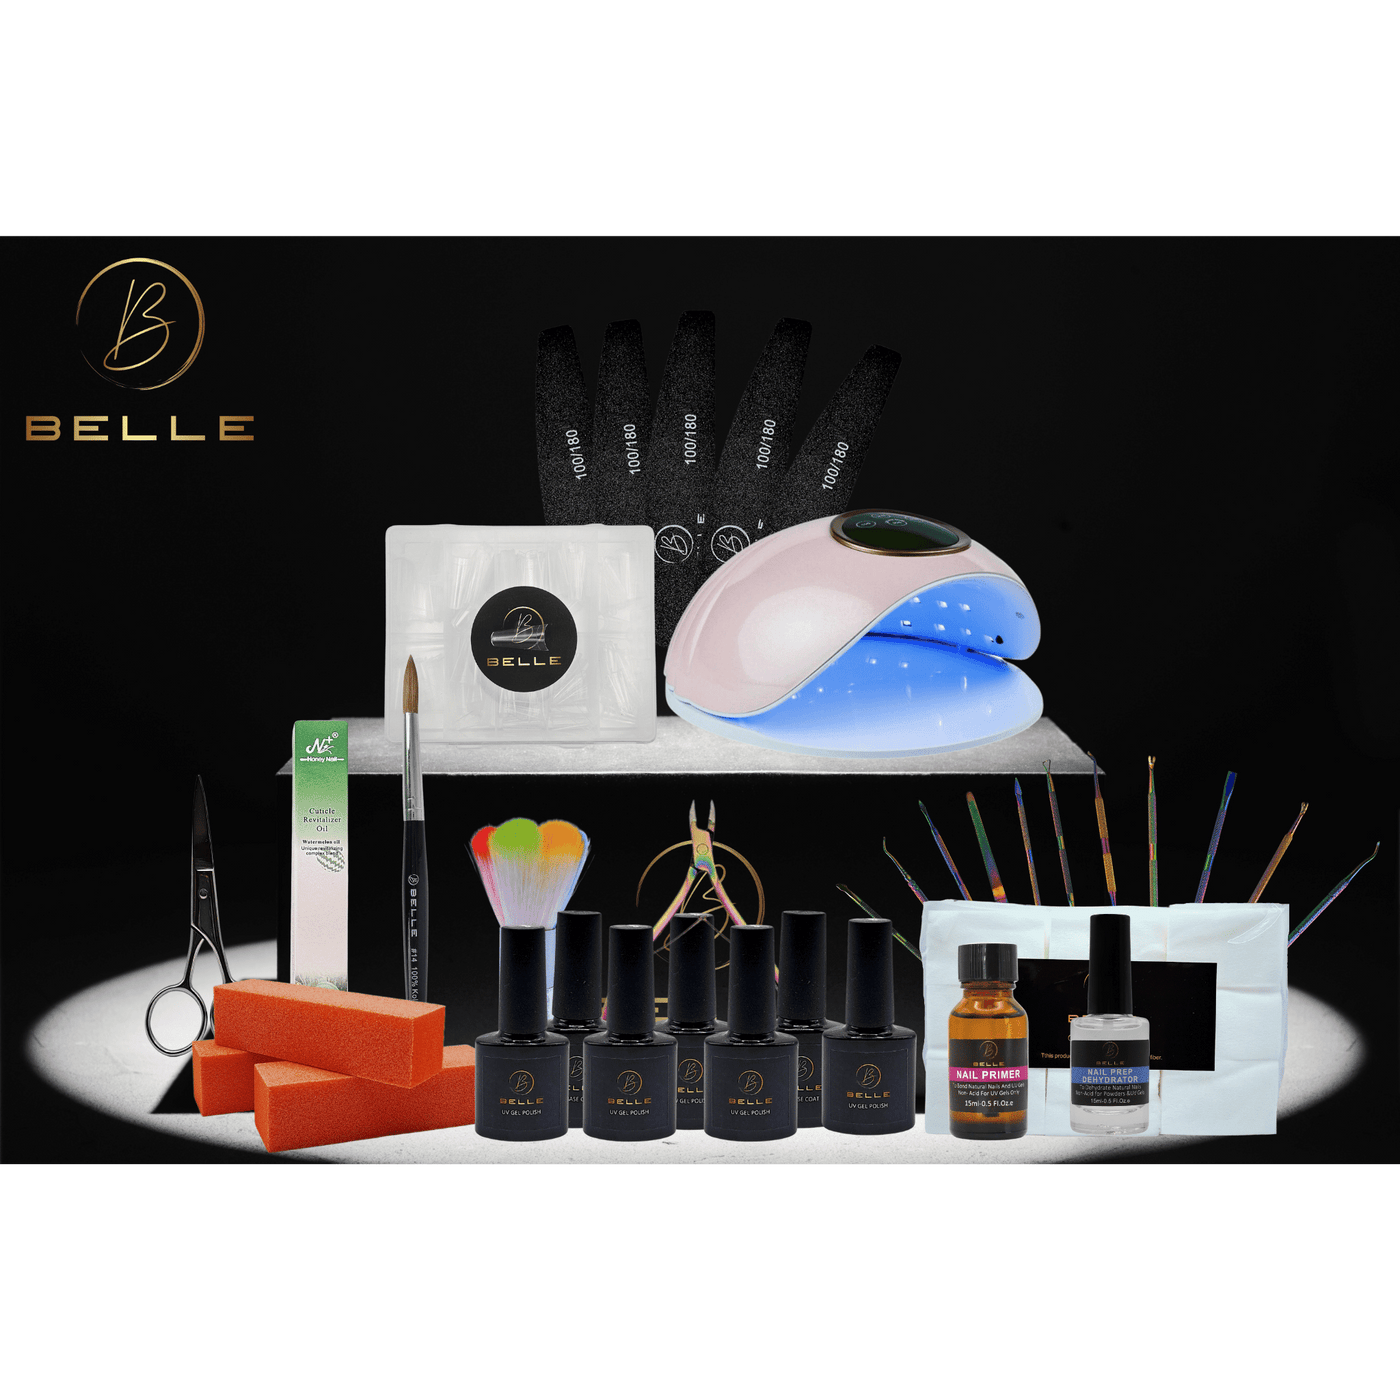 Belle Beauty beginner nail kit on a black background